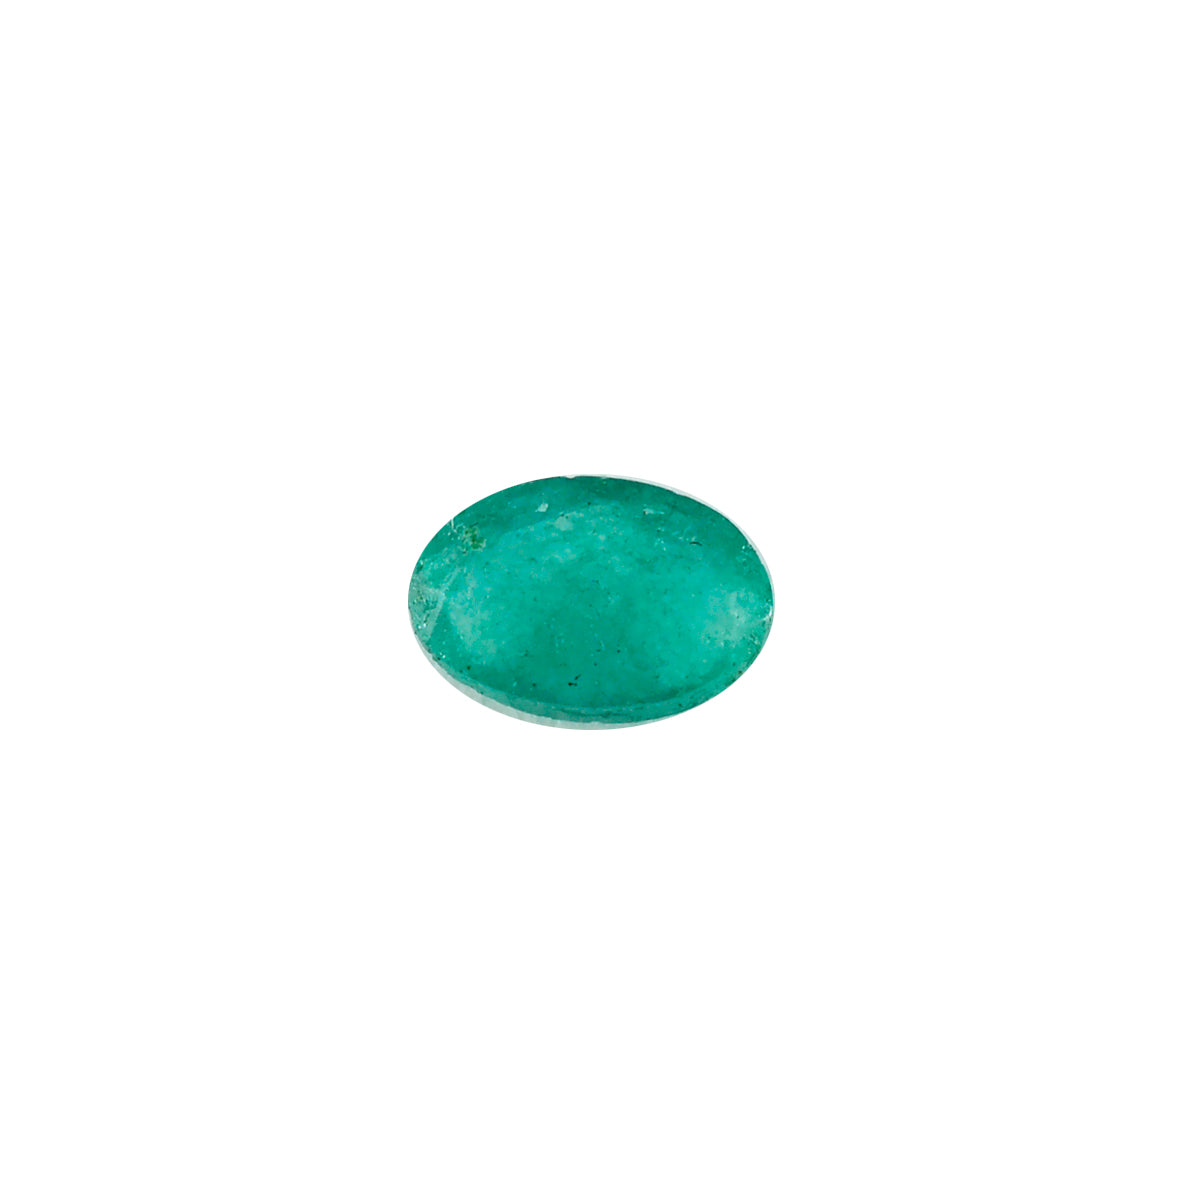 Riyogems 1PC Genuine Green Jasper Faceted 8x10 mm Oval Shape startling Quality Stone